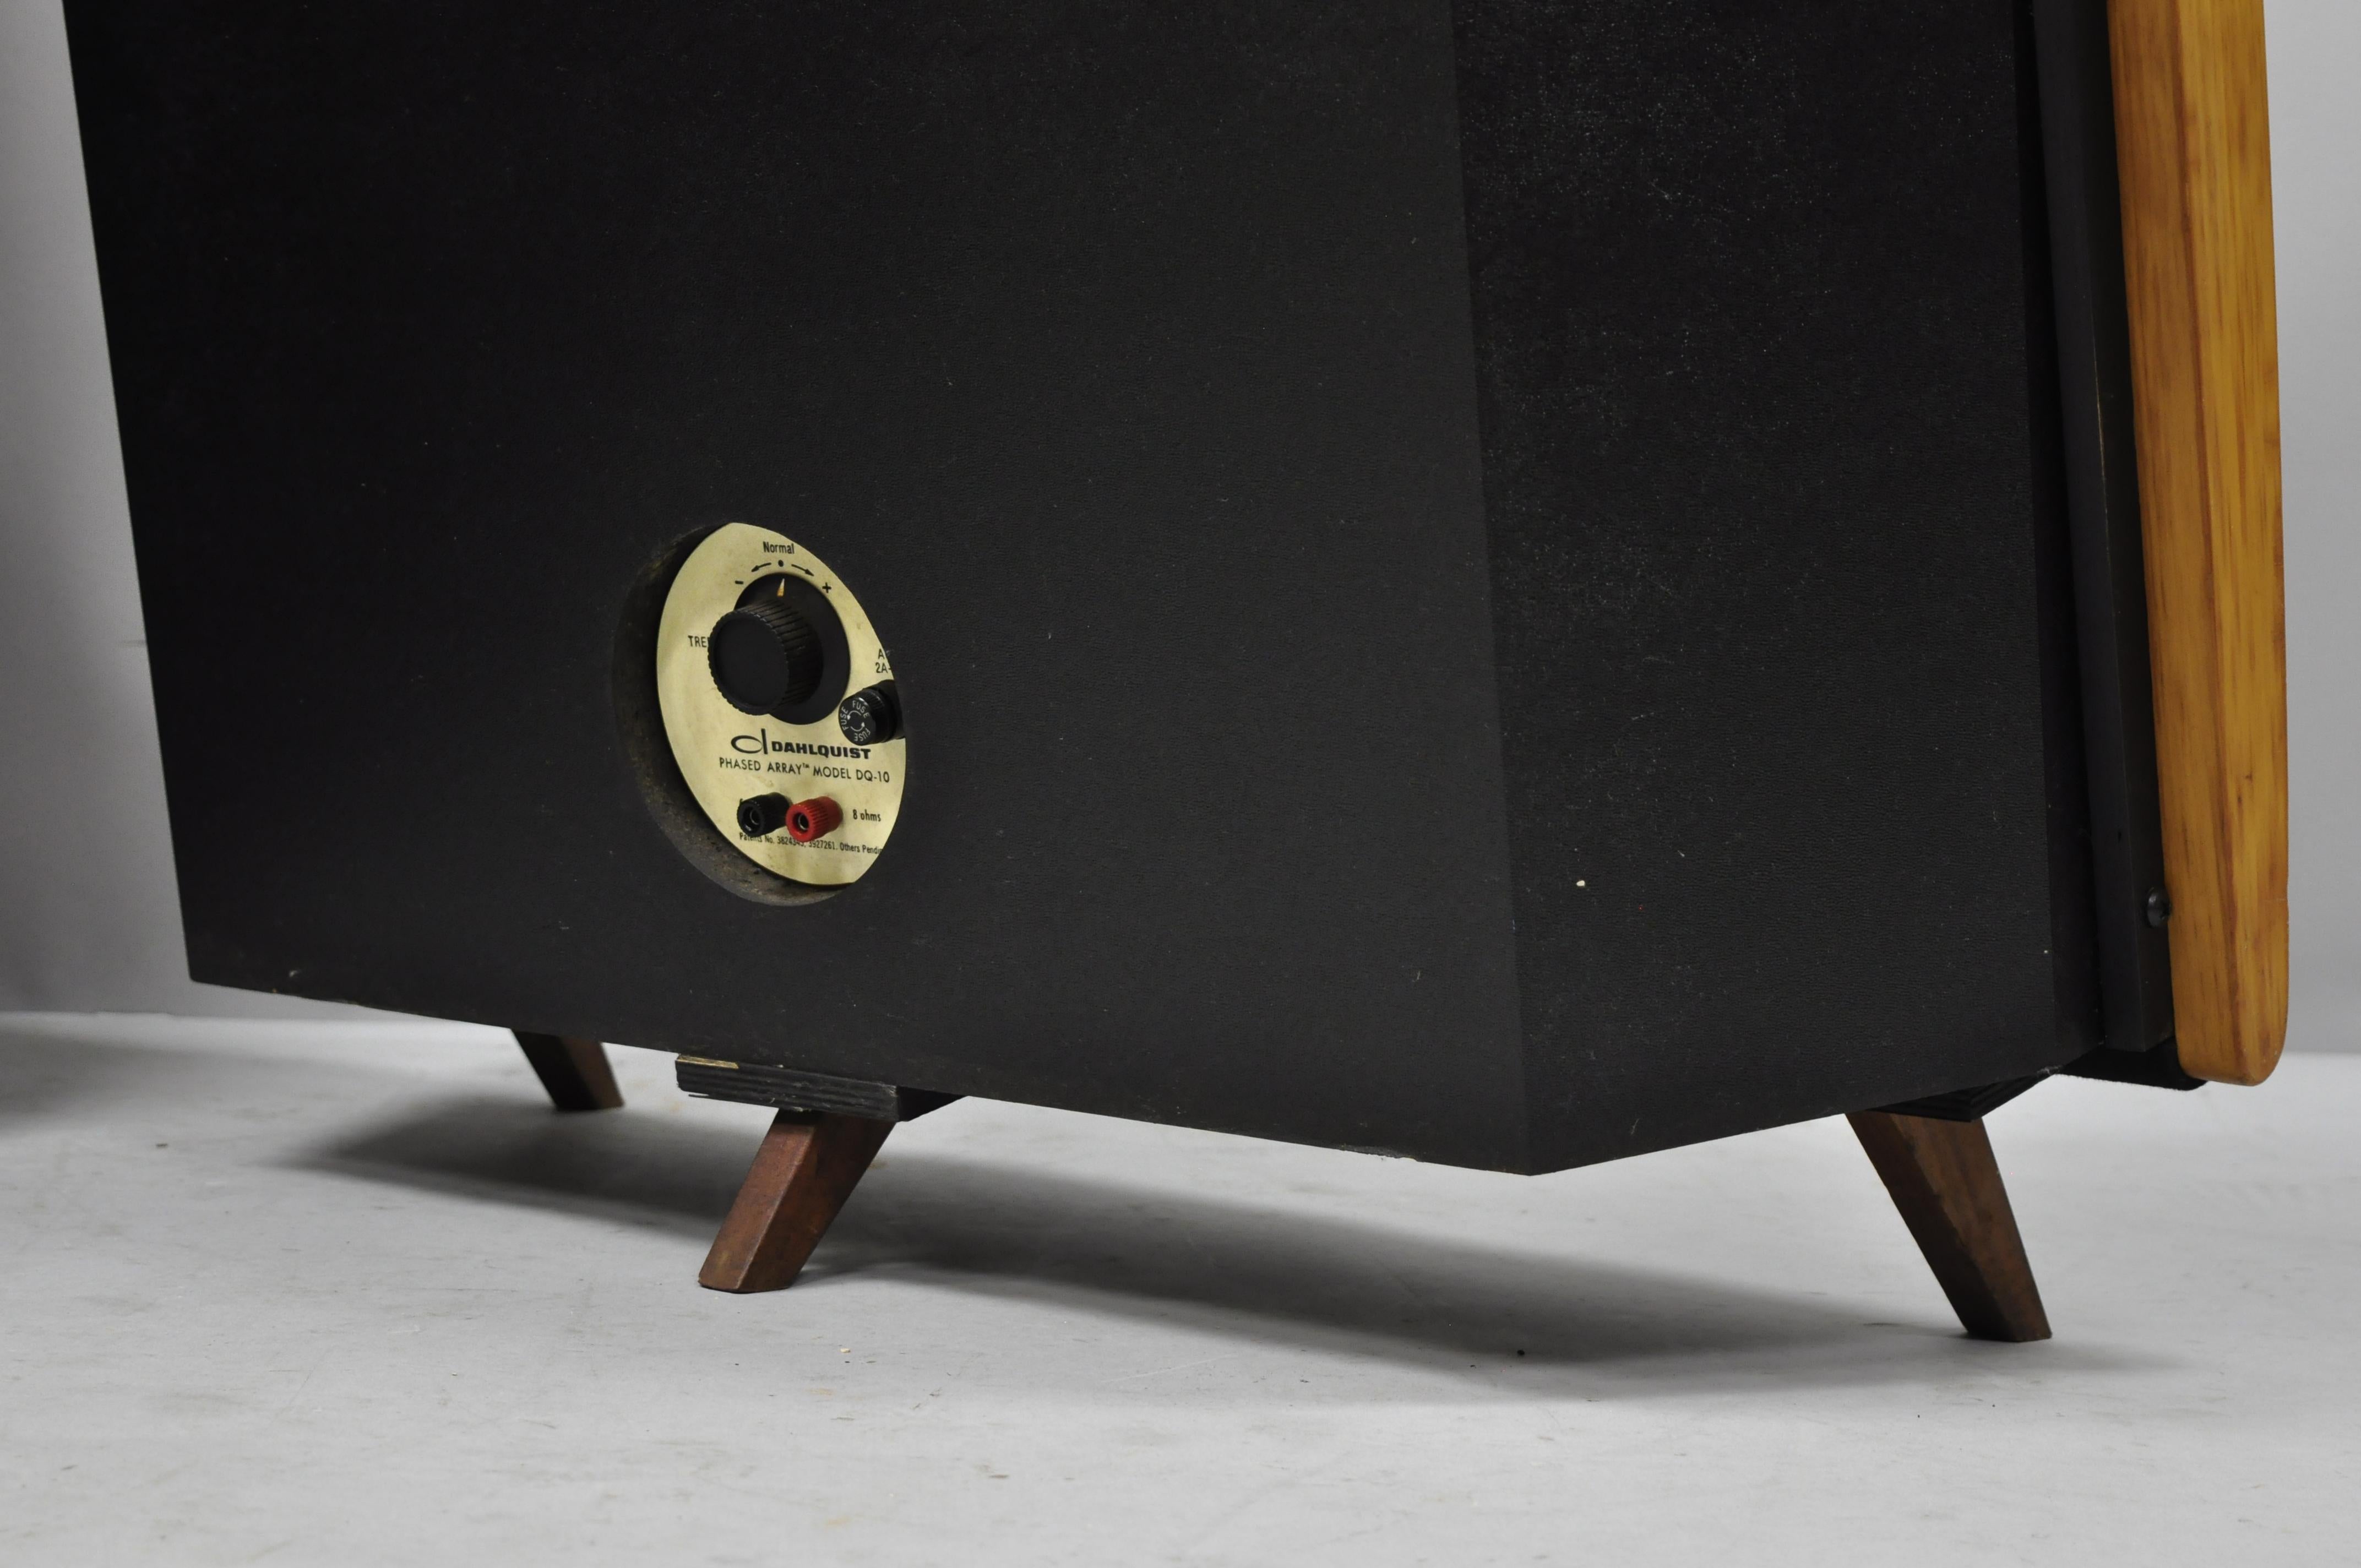 Vintage Pair of Dahlquist Phased Array Model DQ-10 Floor Speakers on Feet 1